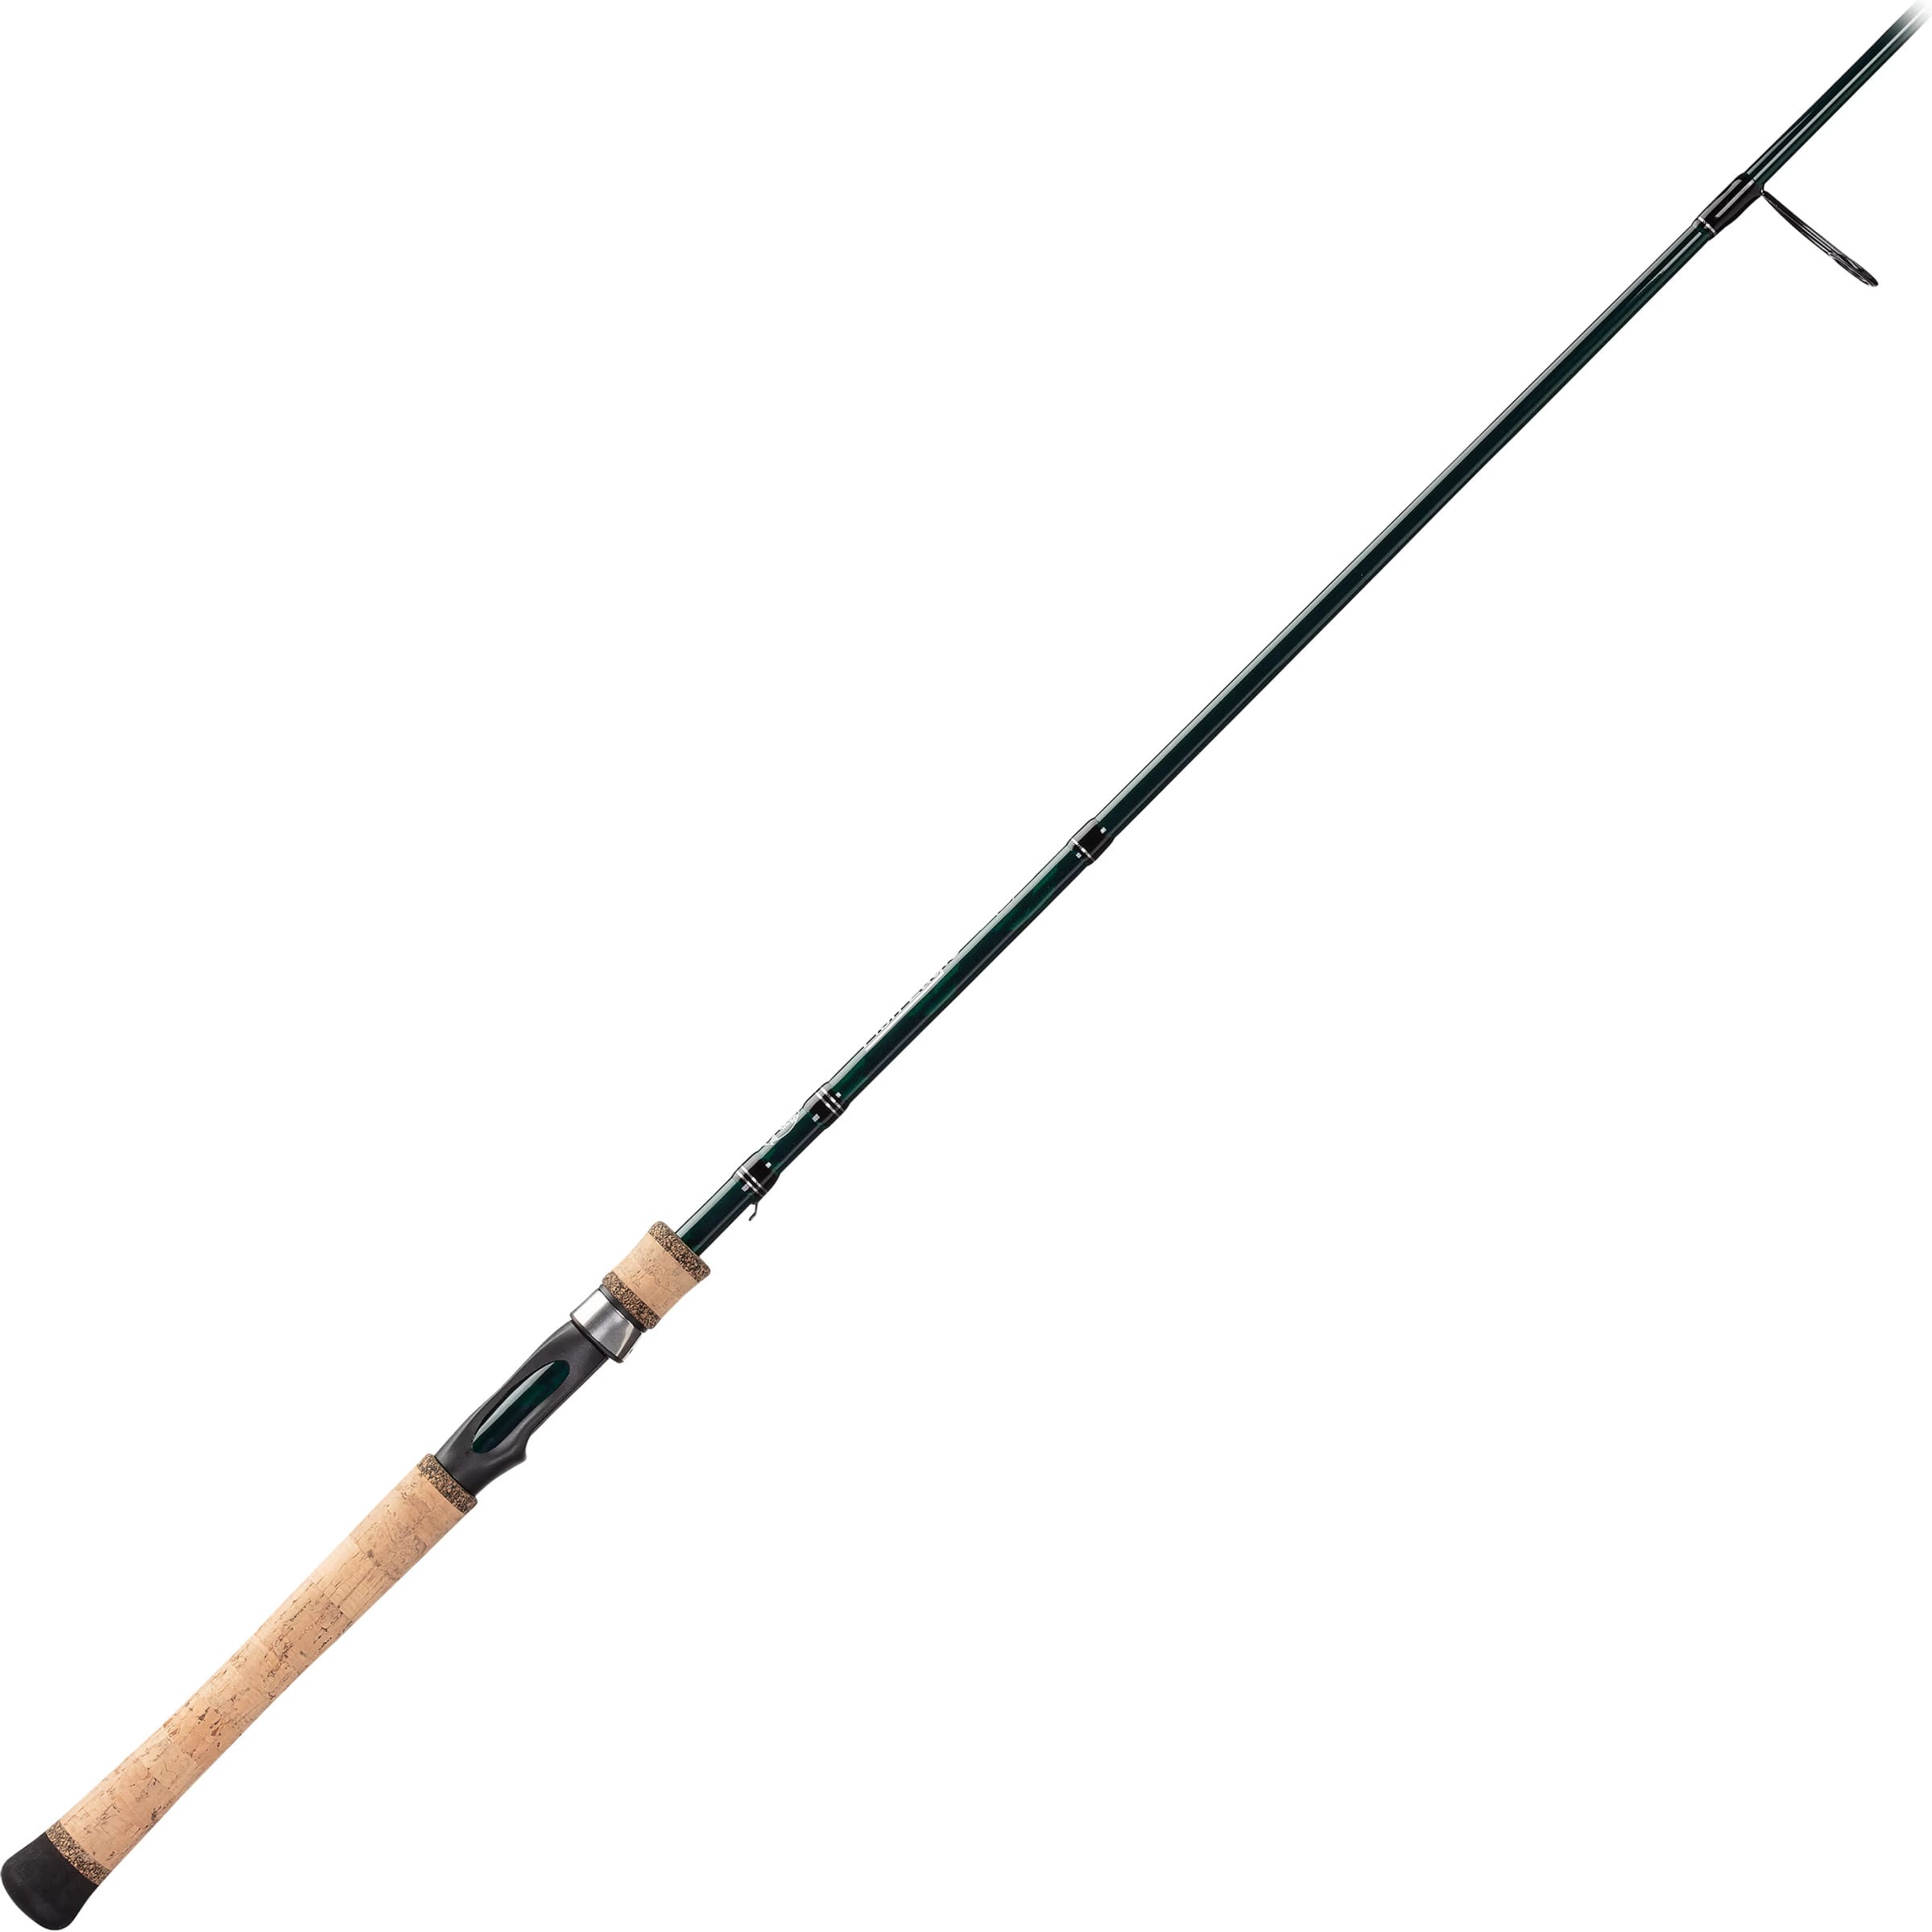 Garcia Thunder Stik Bass casting fishing rod made in USA (lot